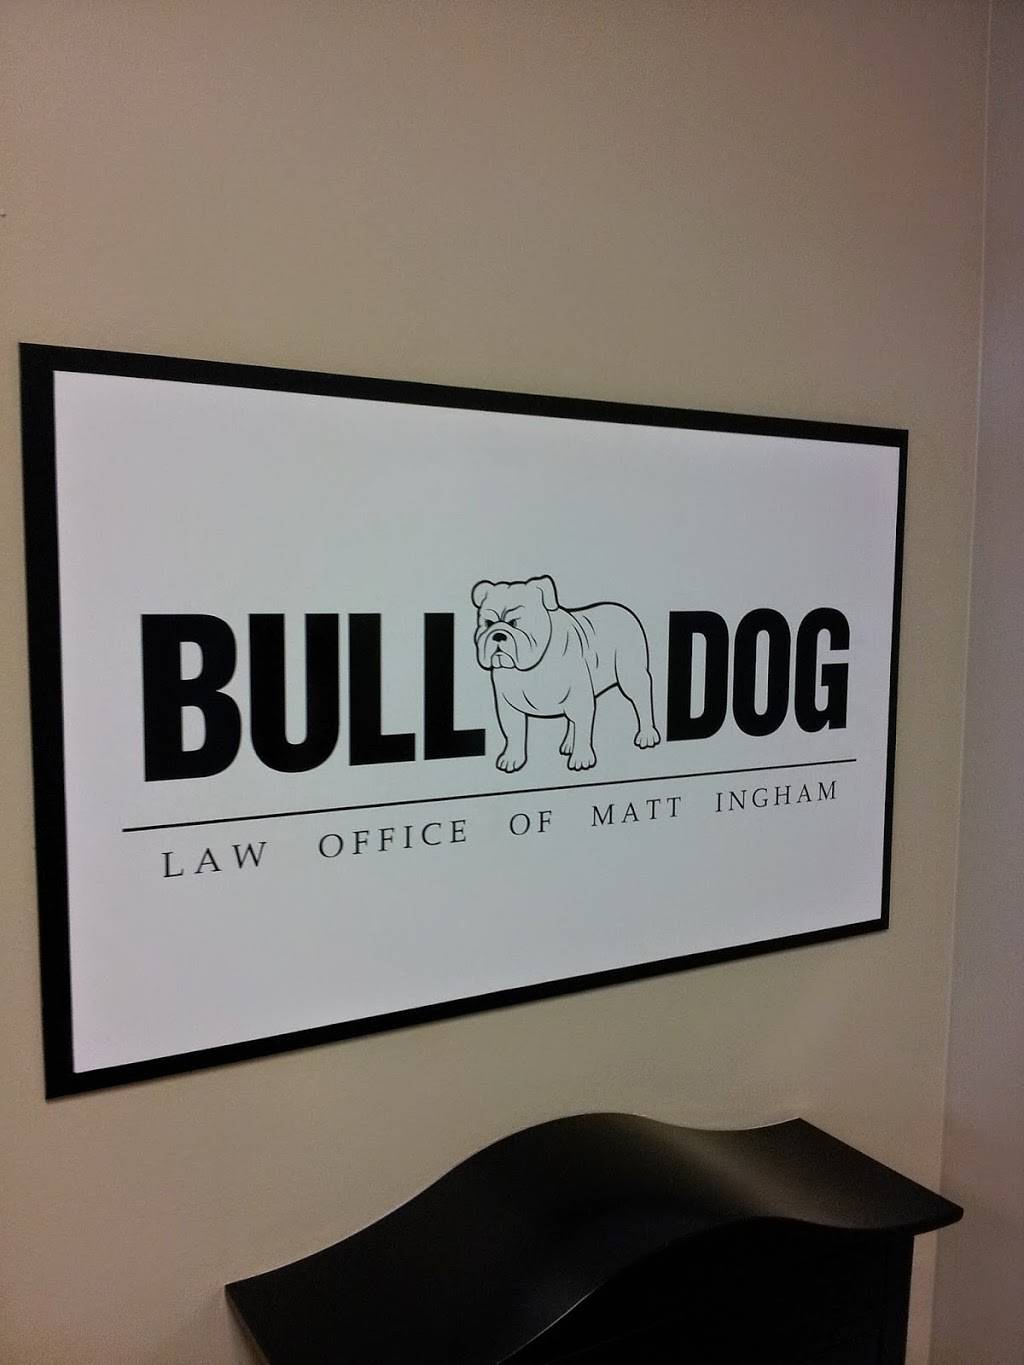 Bulldog Divorce™ | 4743 S Union Ave, Tulsa, OK 74107, USA | Phone: (918) 591-2566